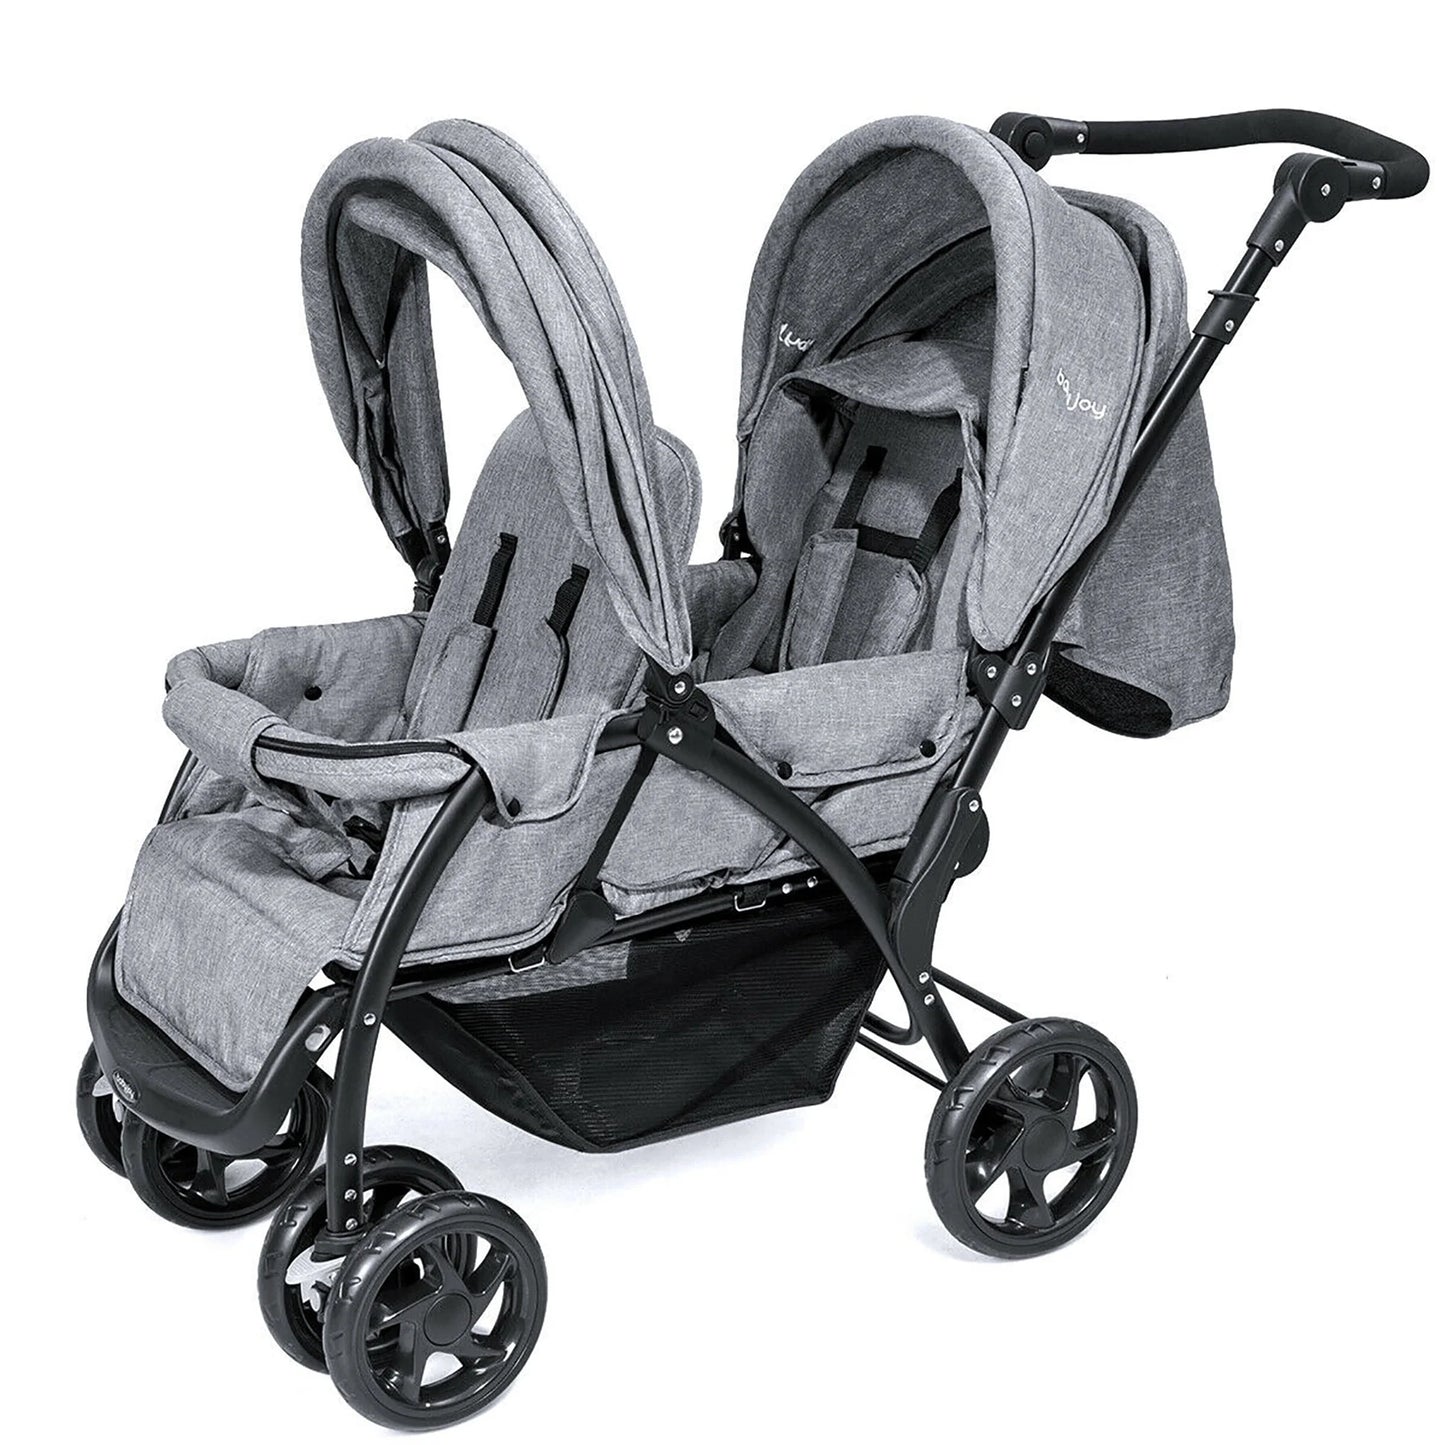 Babyjoy Double Stroller Foldable Baby Twin Lightweight Travel Stroller Infant Pushchair Grey